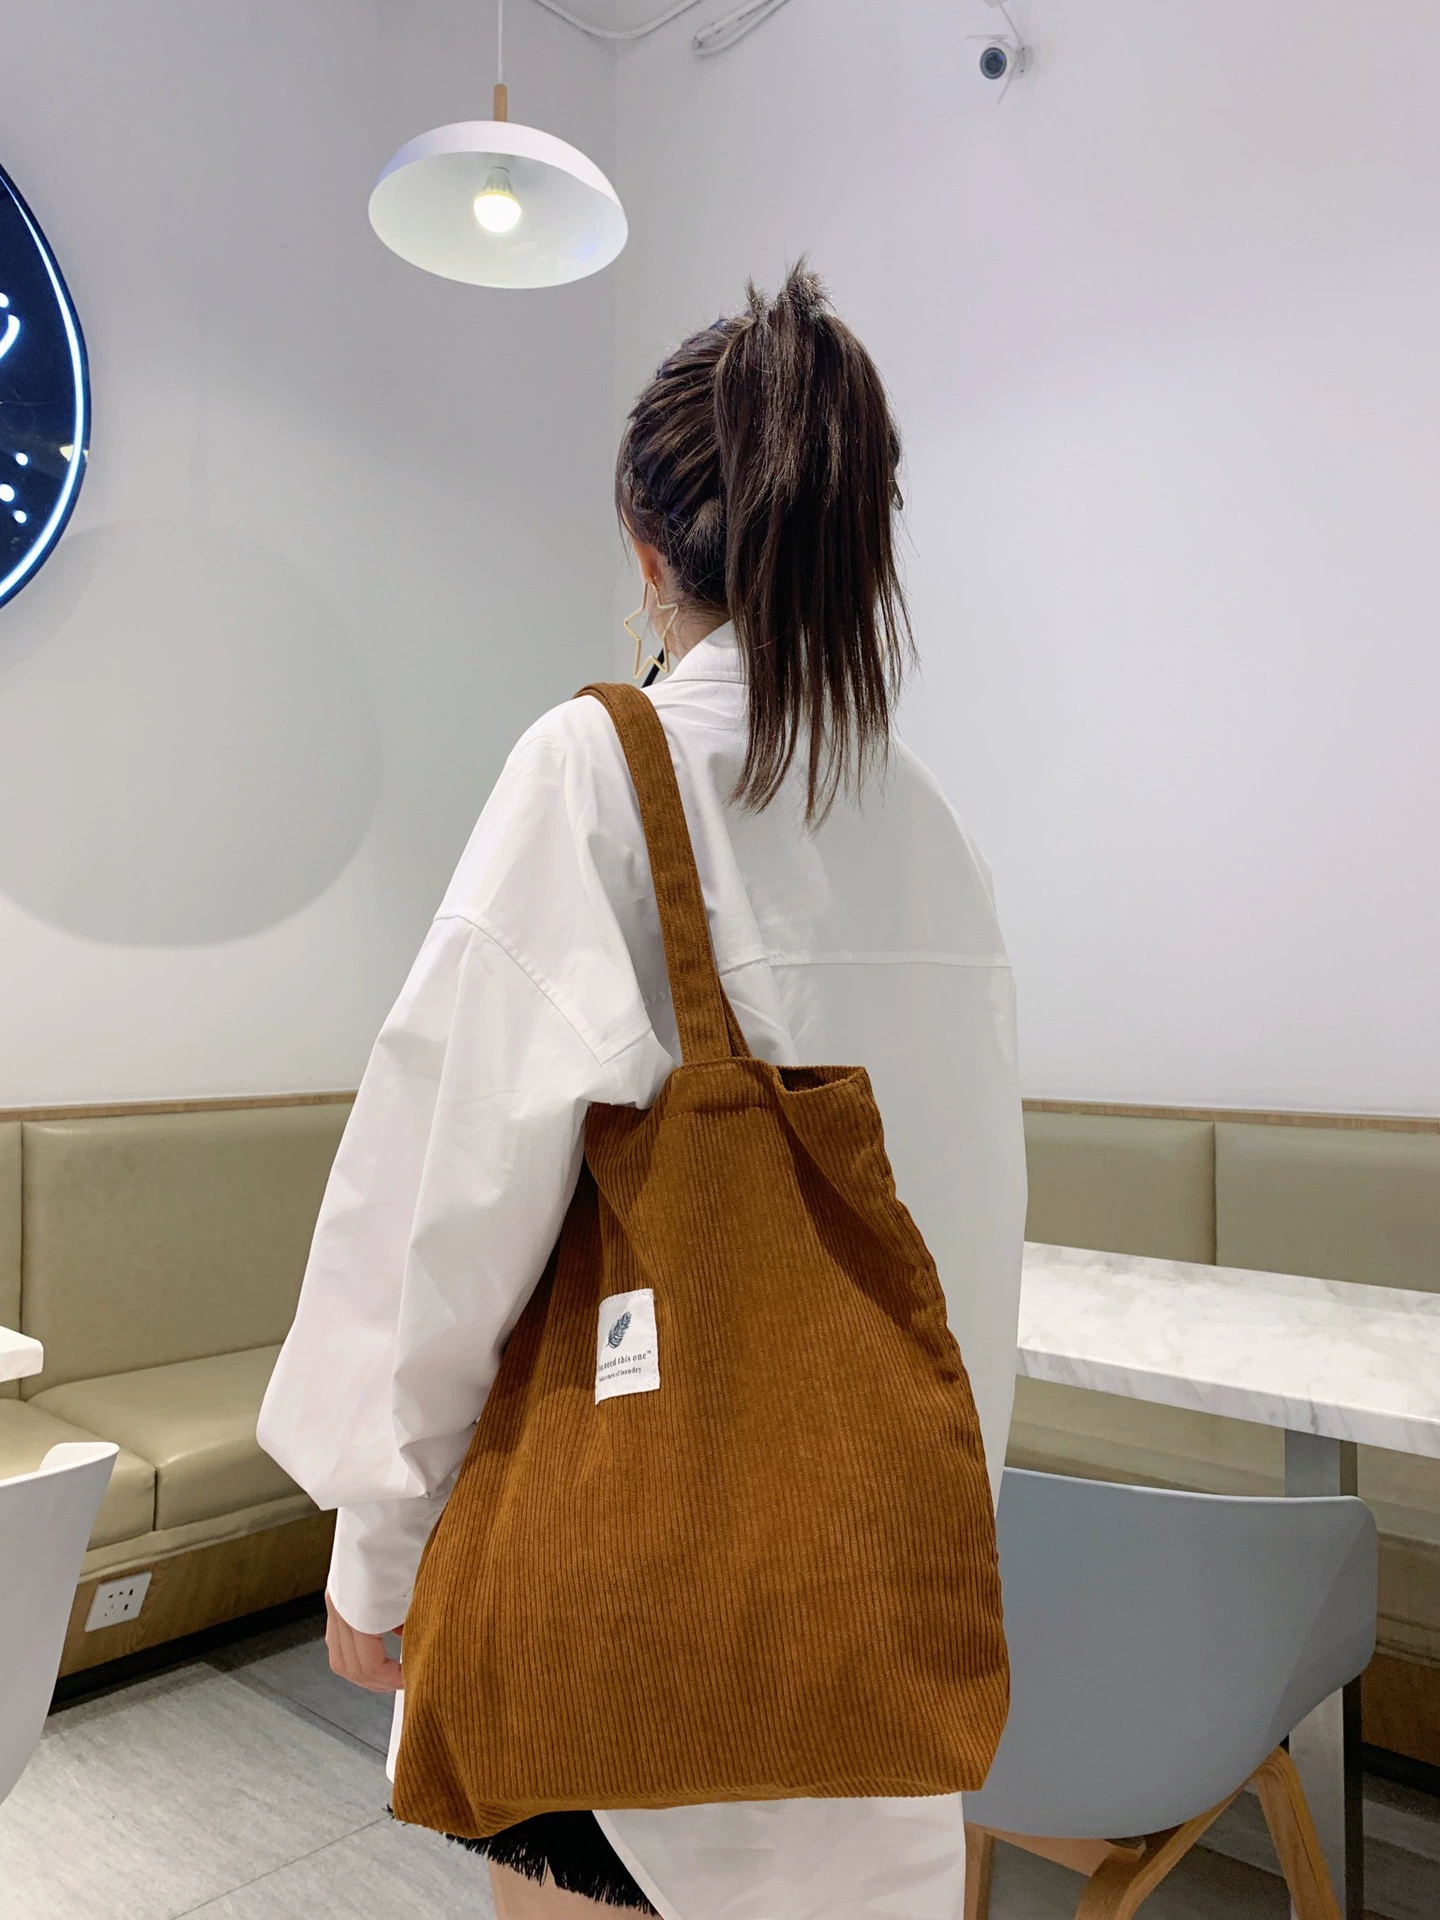 Simple Women Package Print Cute Bear Canvas Bag Handbags Japanese Literary Shoulder Bag Casual Shopping Tote Girl Handbag